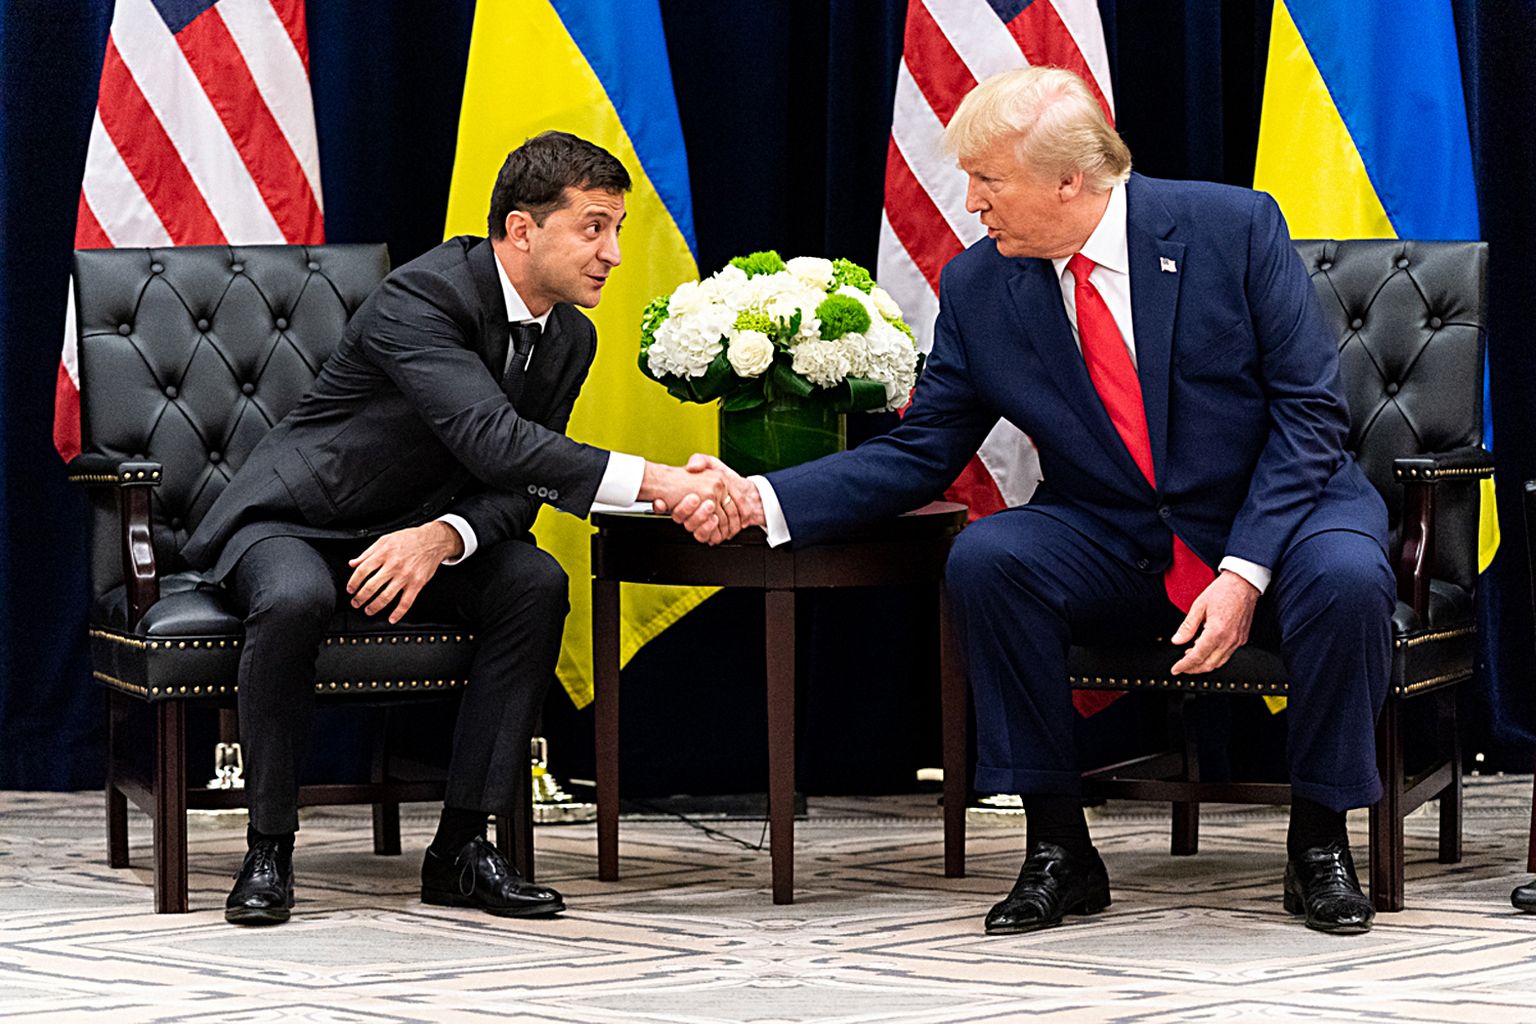 Сентябрь 2019 года. Президент Зеленский и президент Трамп.